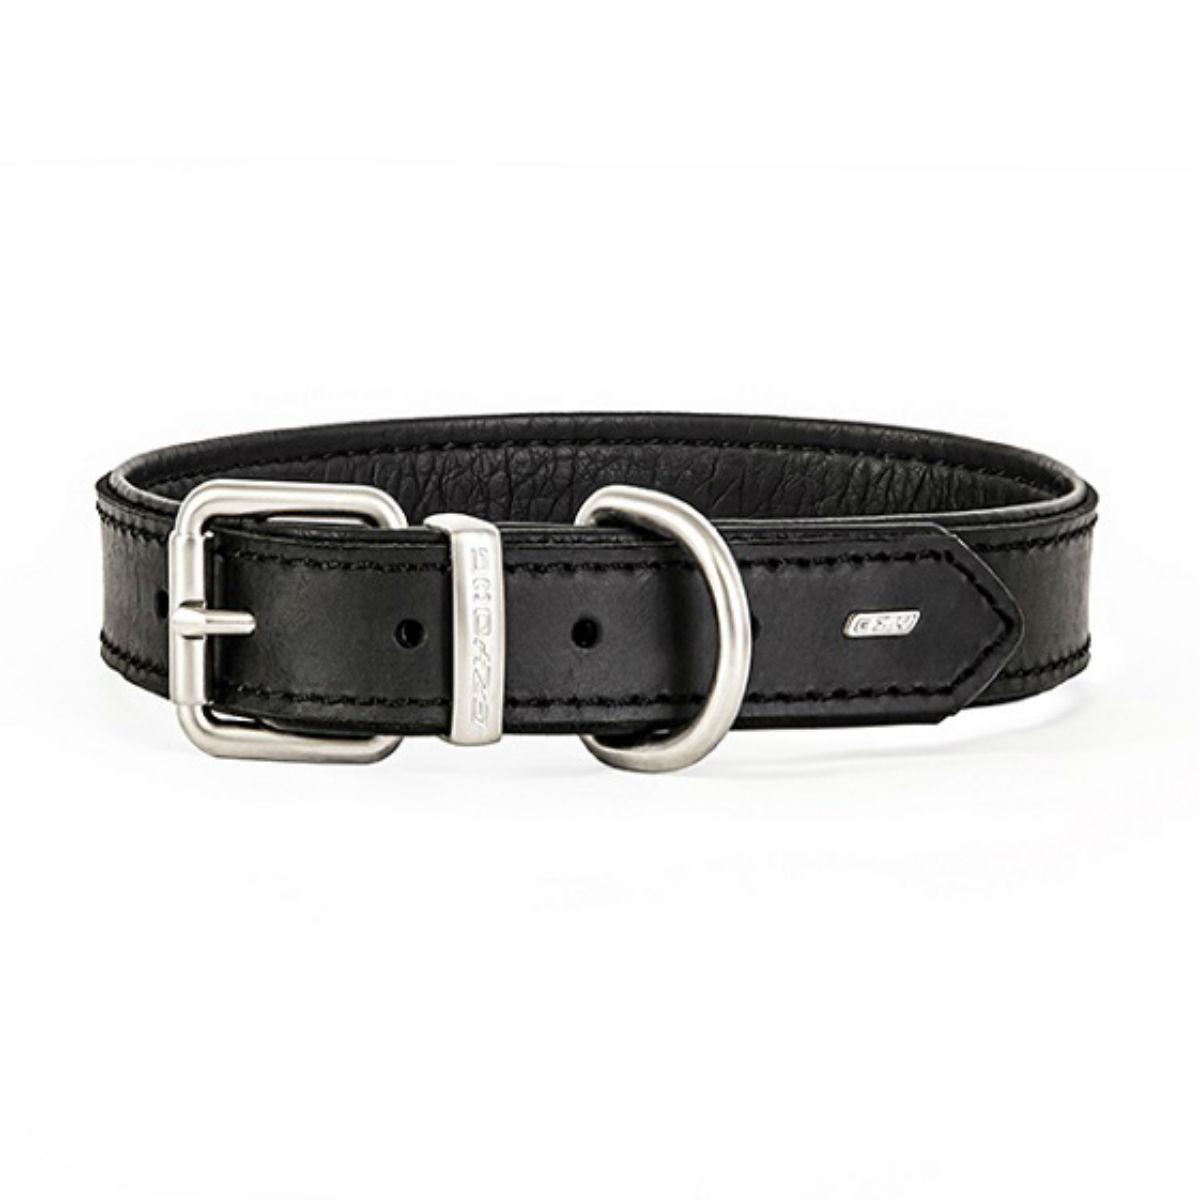 EzyDog Oxford Leather Dog Collar - Black